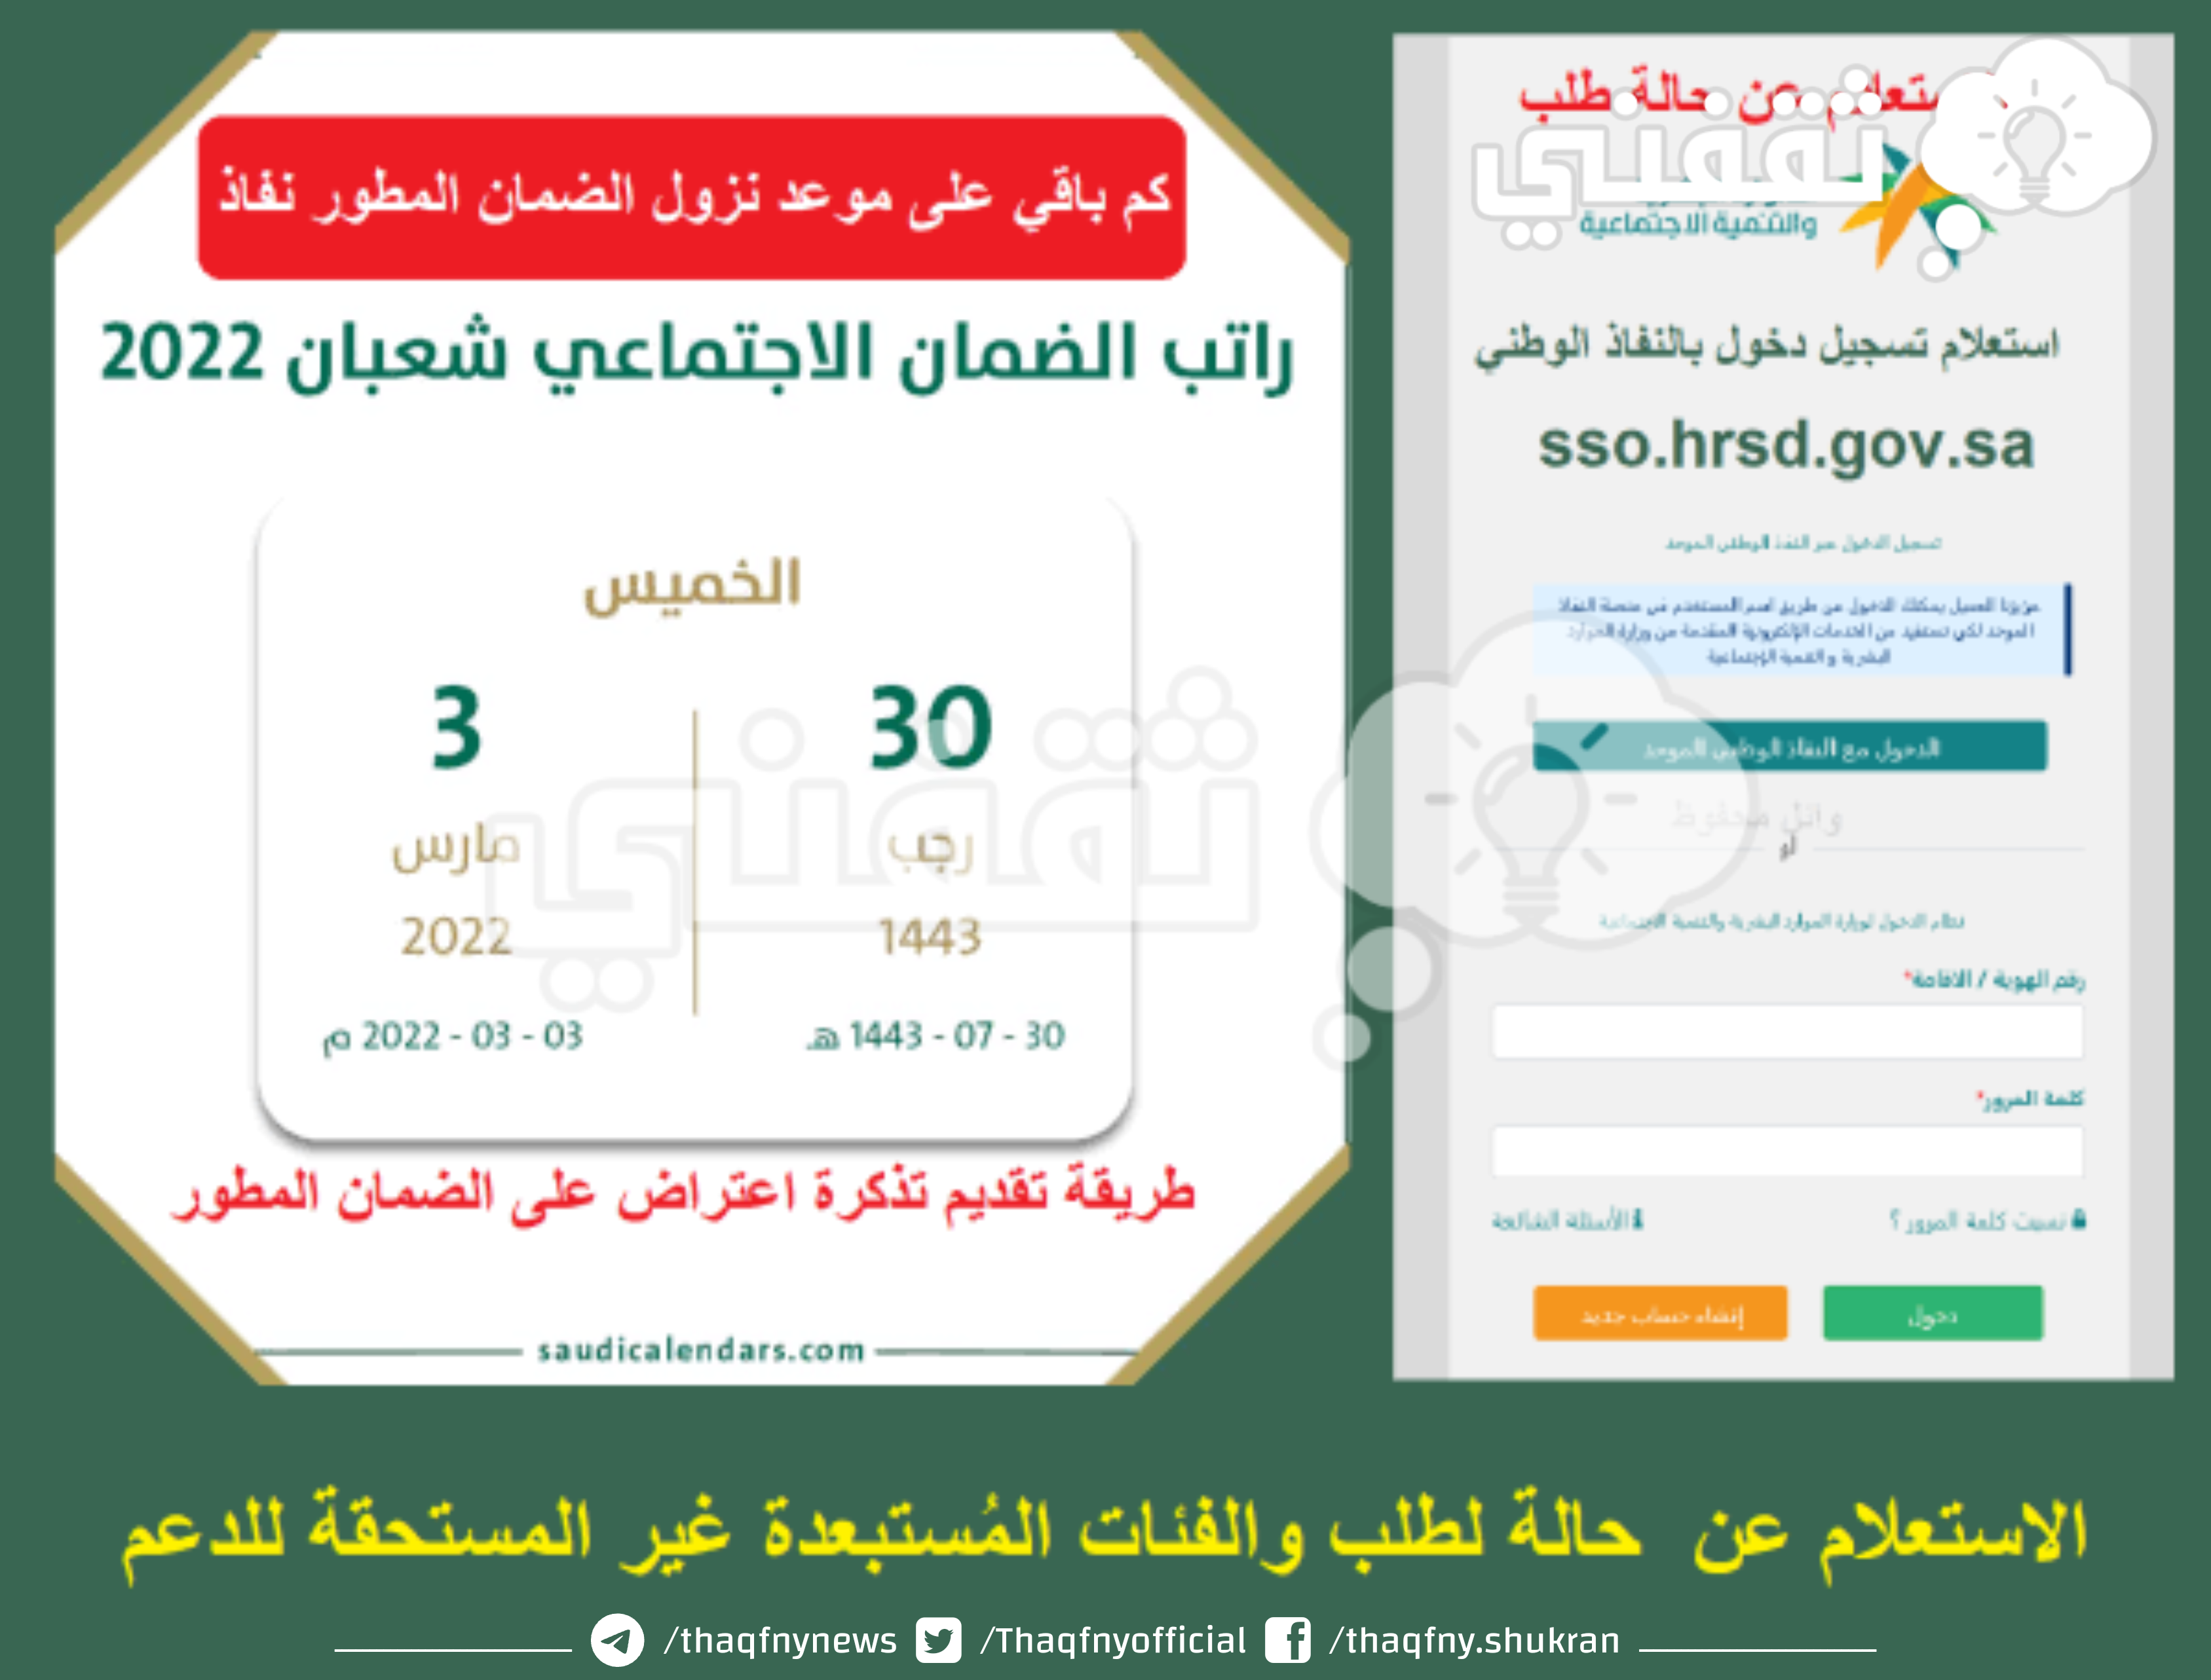 png 24 2 - مدونة التقنية العربية